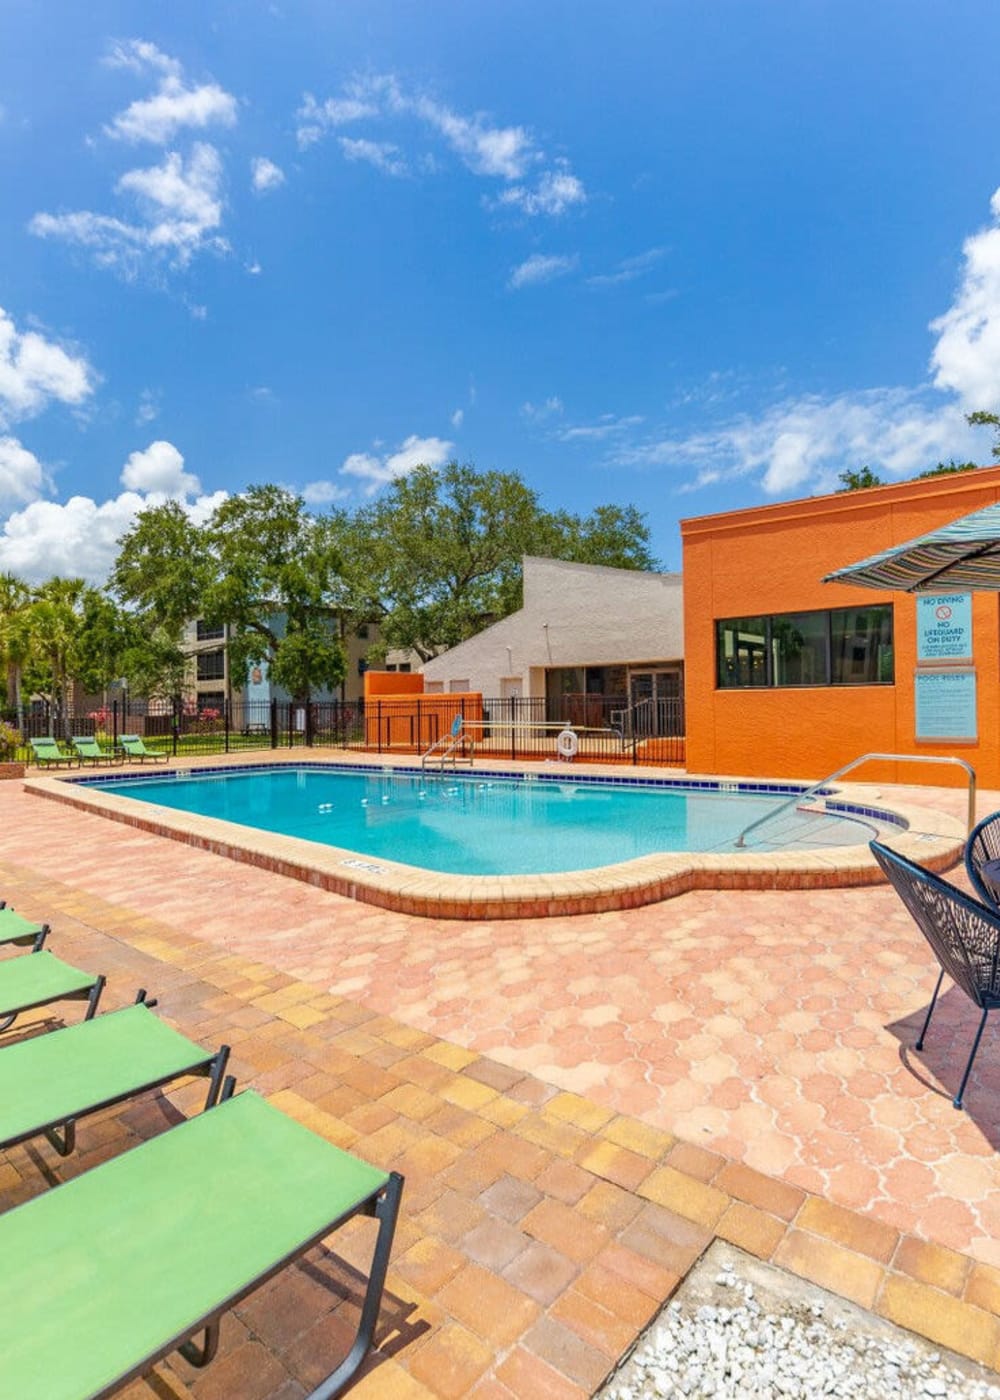 Pool at Milo Bayside in Saint Petersburg, Florida